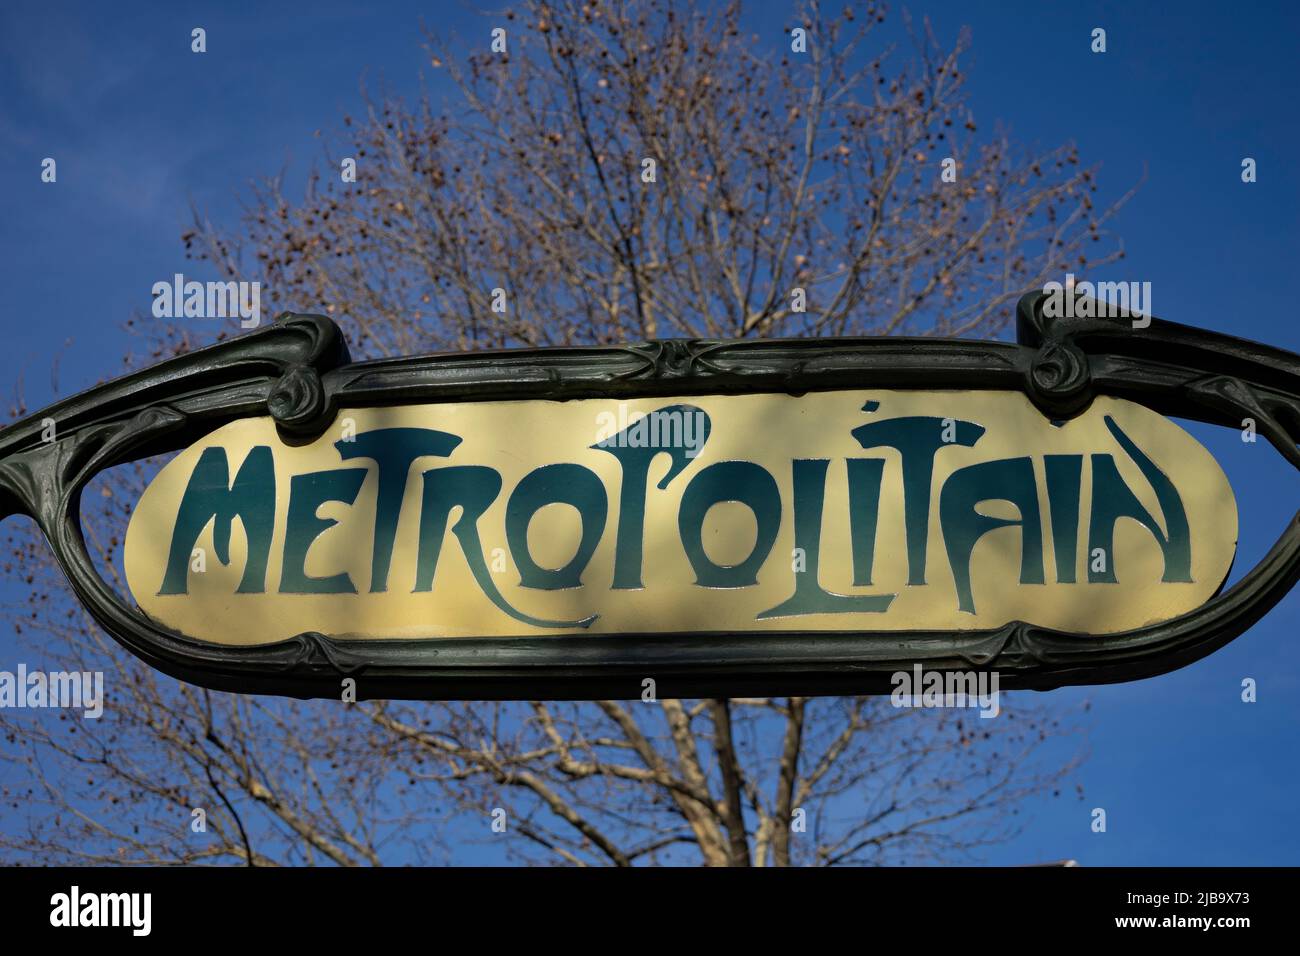 Metro sign, Paris, France Stock Photo